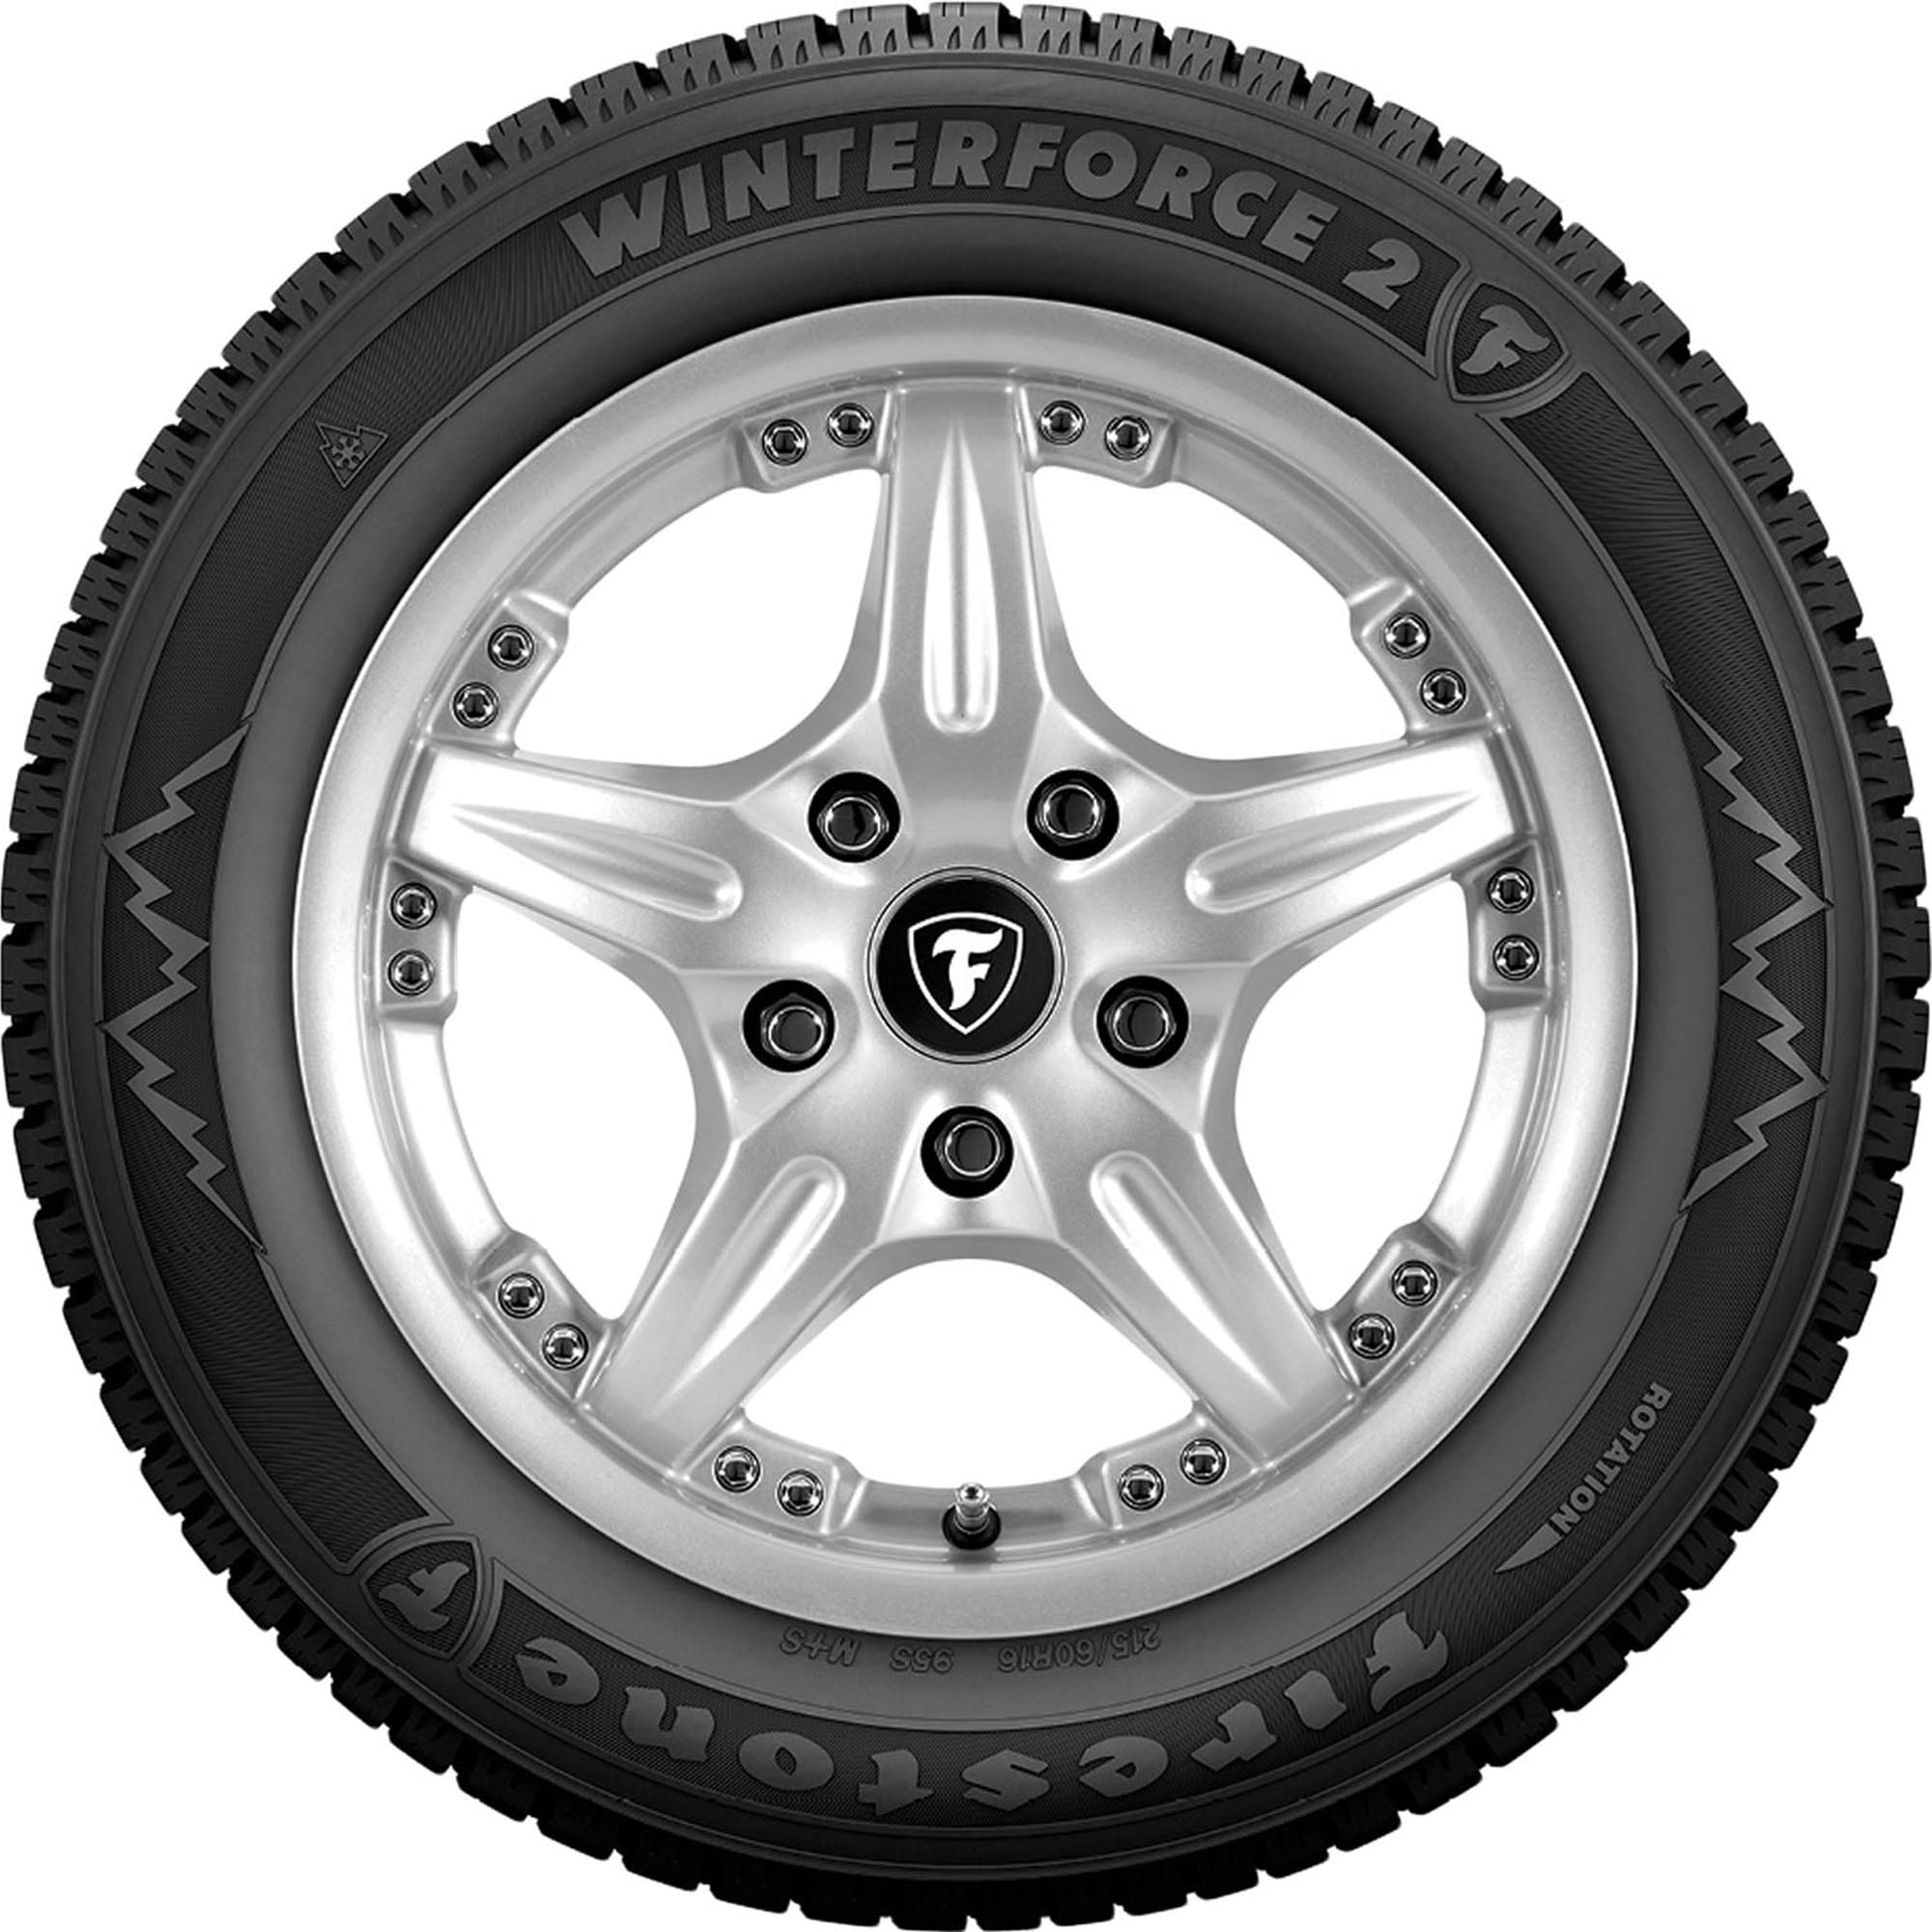 Winterforce Tire Passenger 215/70R15 98S 2 Winter Firestone